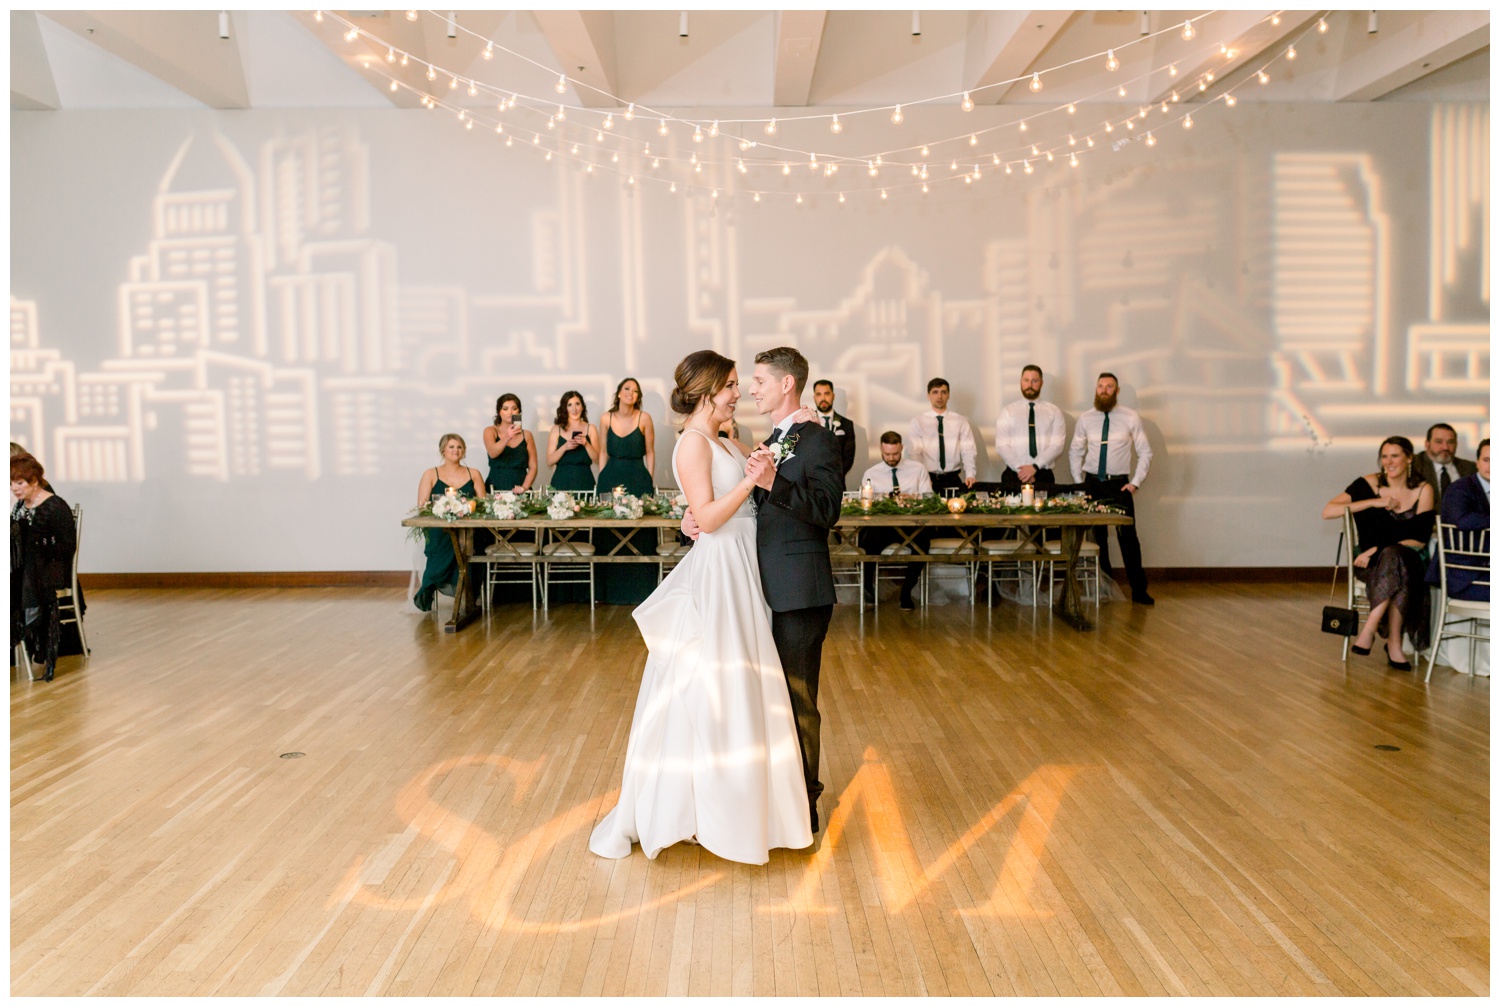 First Dance at The Center Cincinnati Wedding Reception - Party Pleasers Cincinnati Skyline Lighting